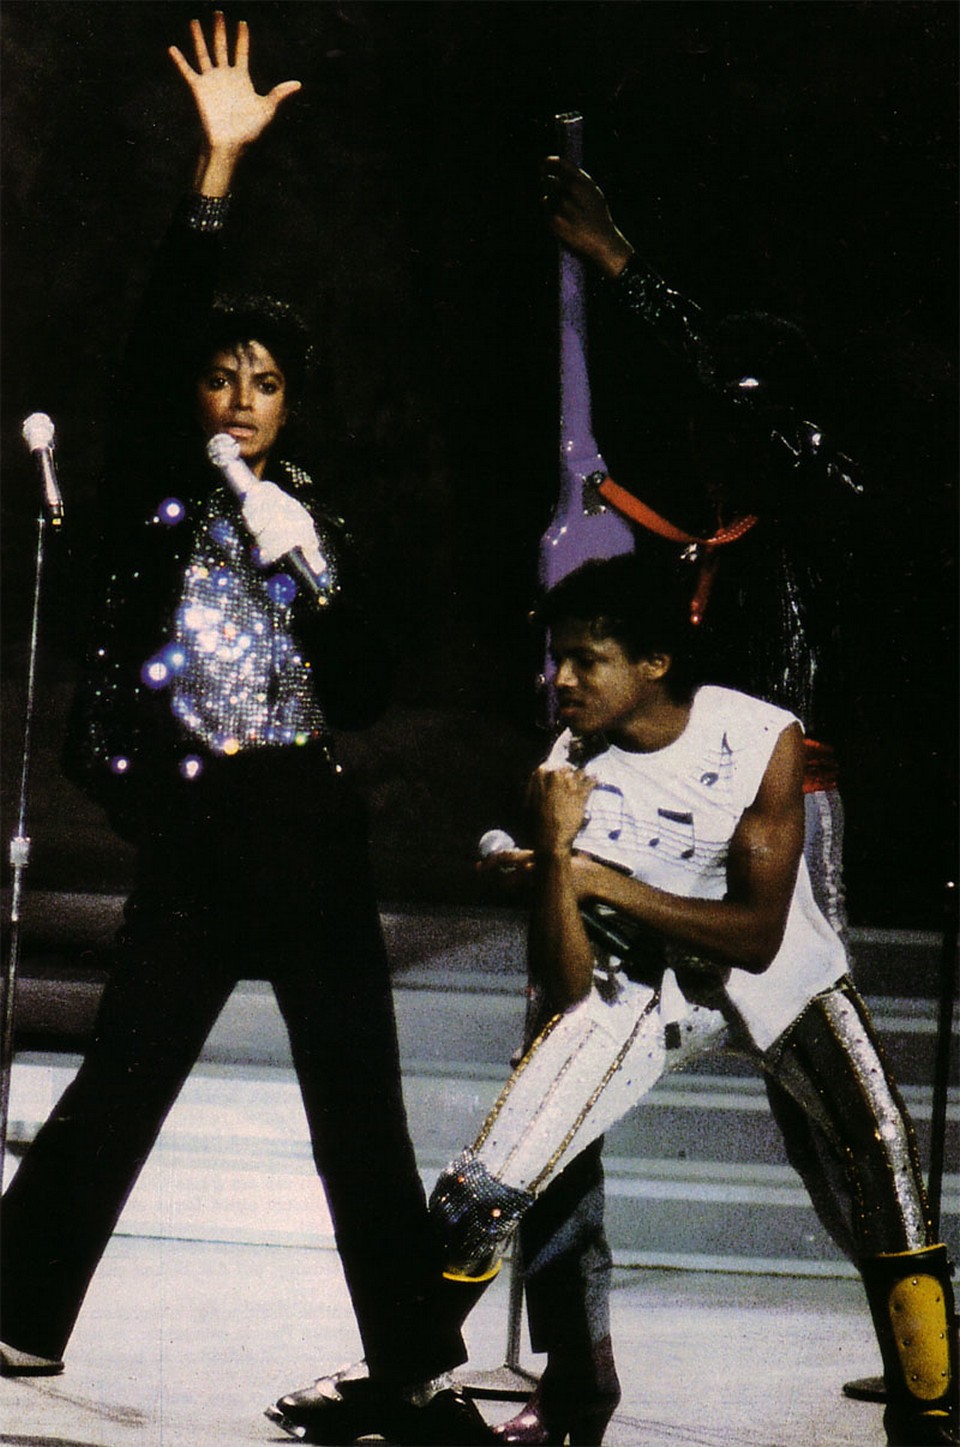 Michael Jackson Motown 25th Anniversary 1983